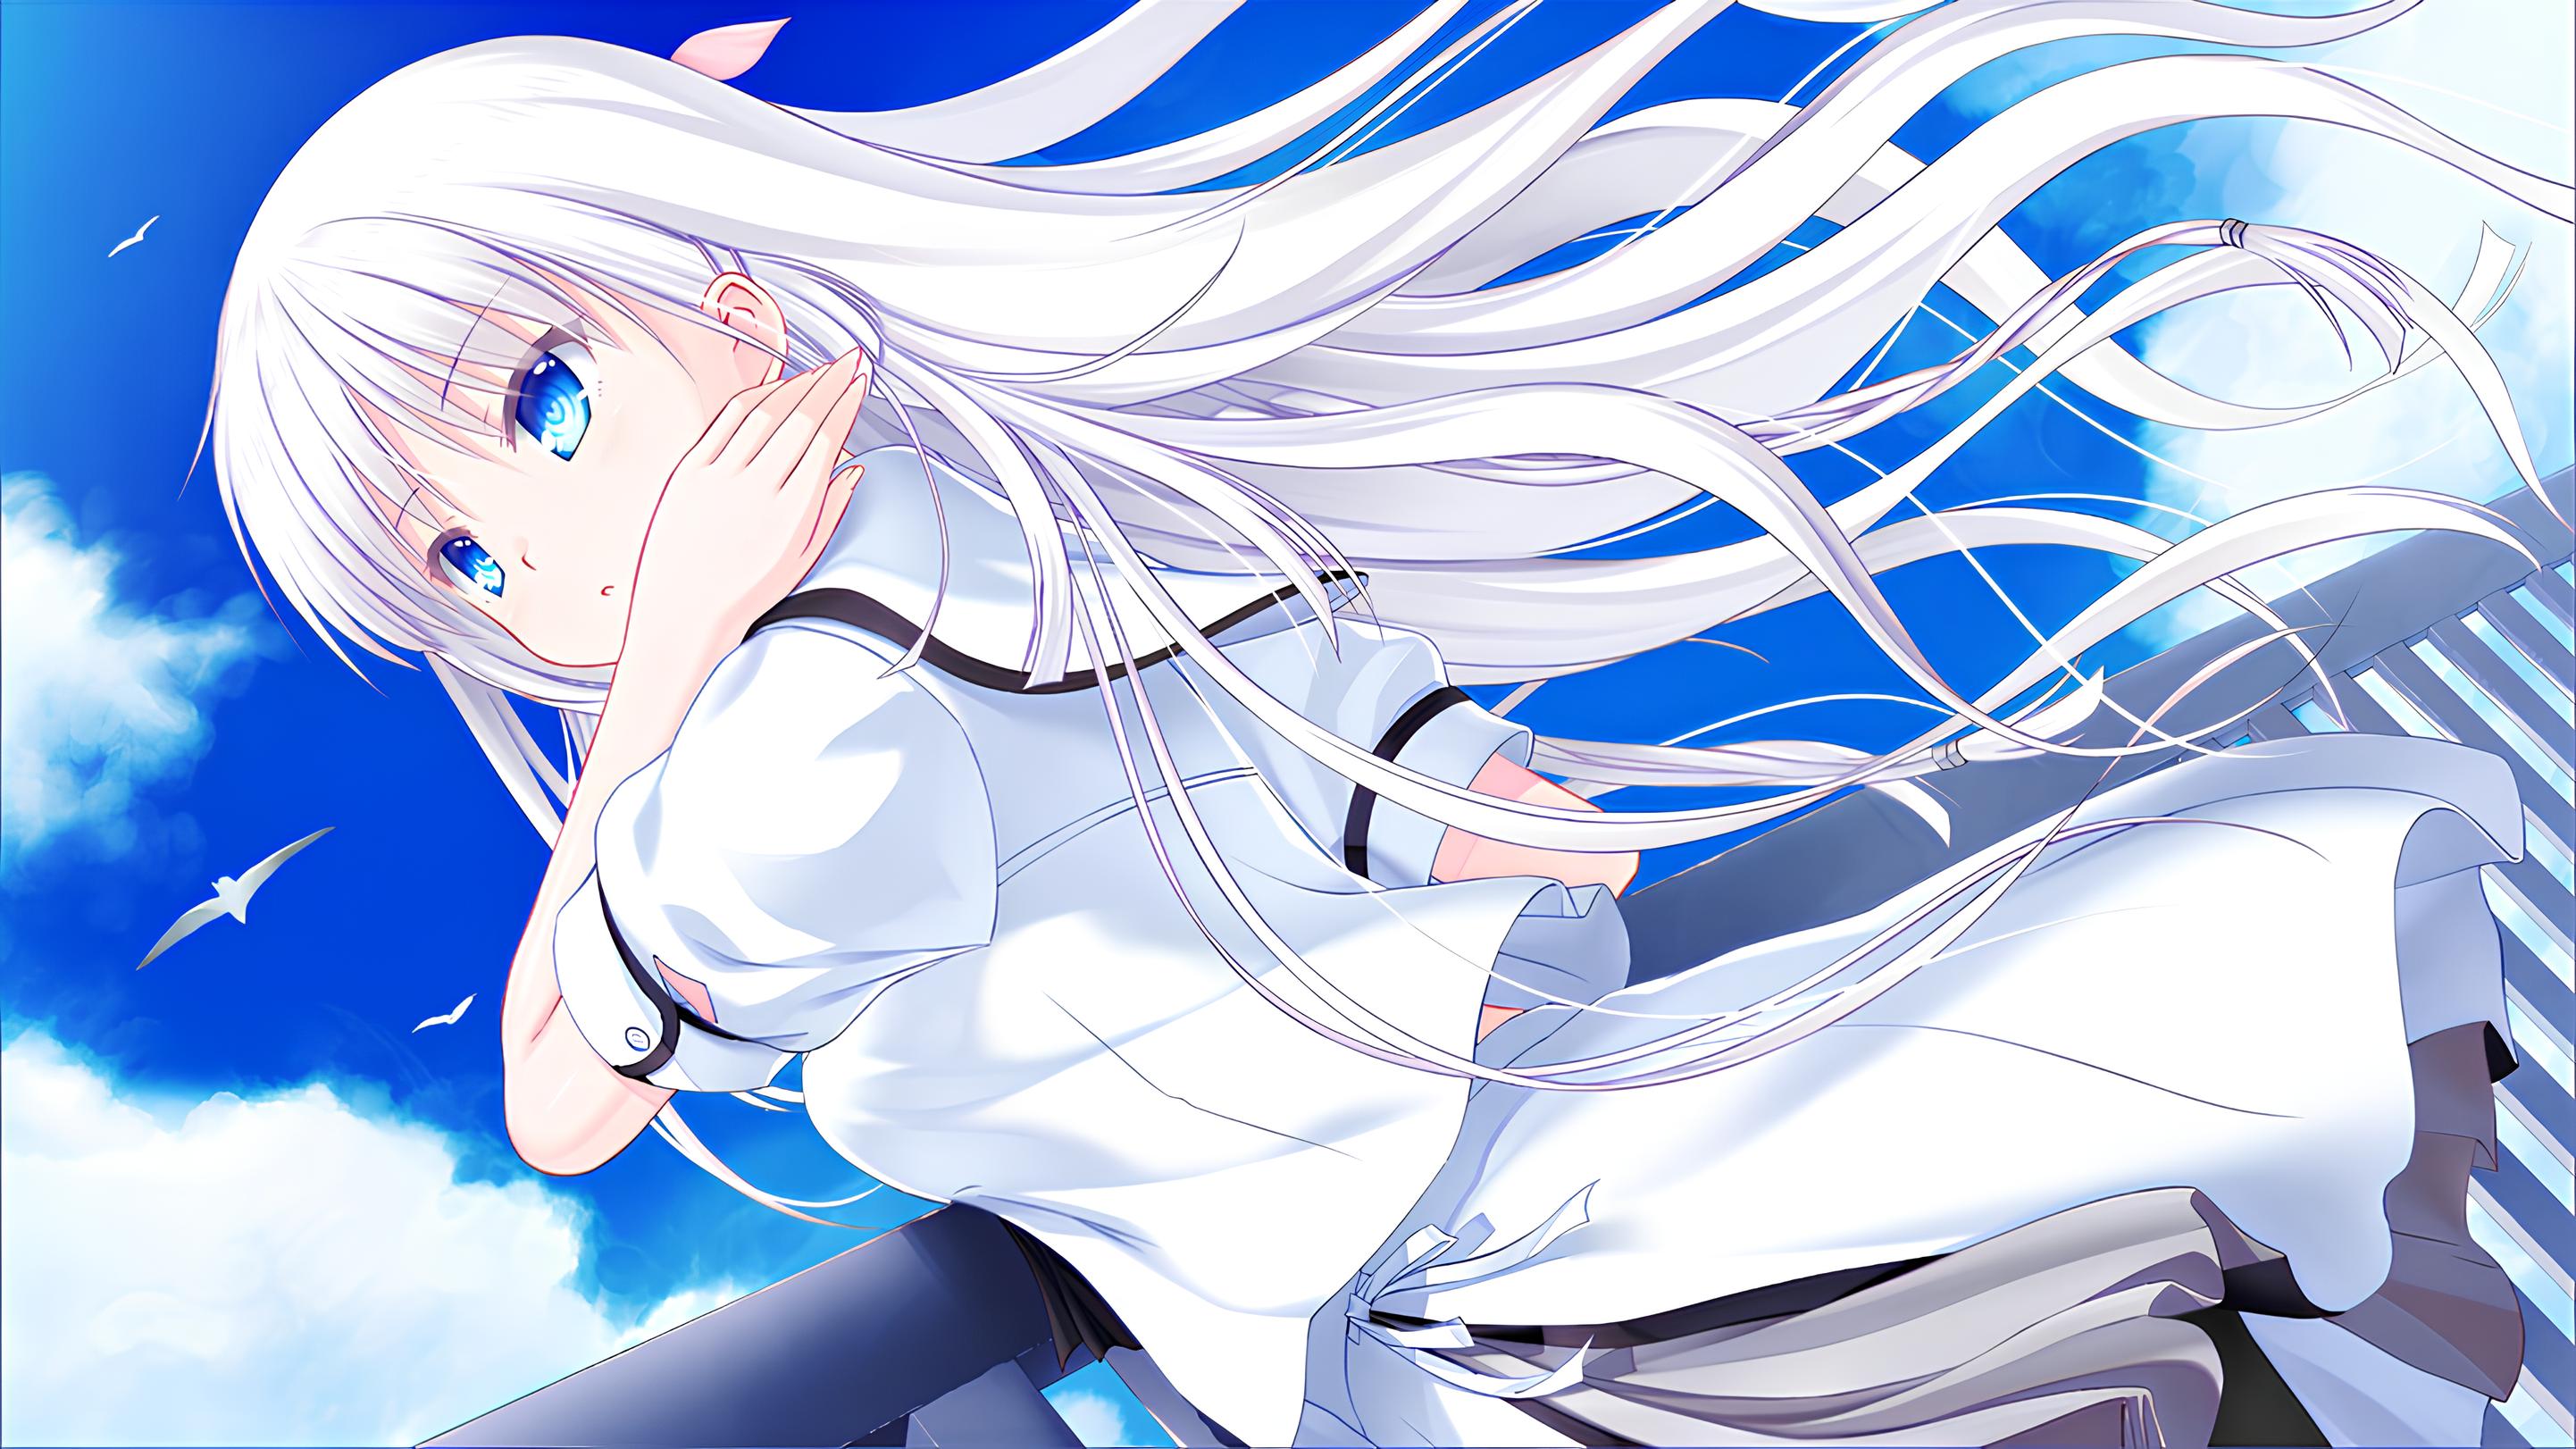 Summer Pockets Anime Girls Long Hair White Hair Blue Eyes Looking Away Uniform Sky Clouds Birds Anim 2884x1622